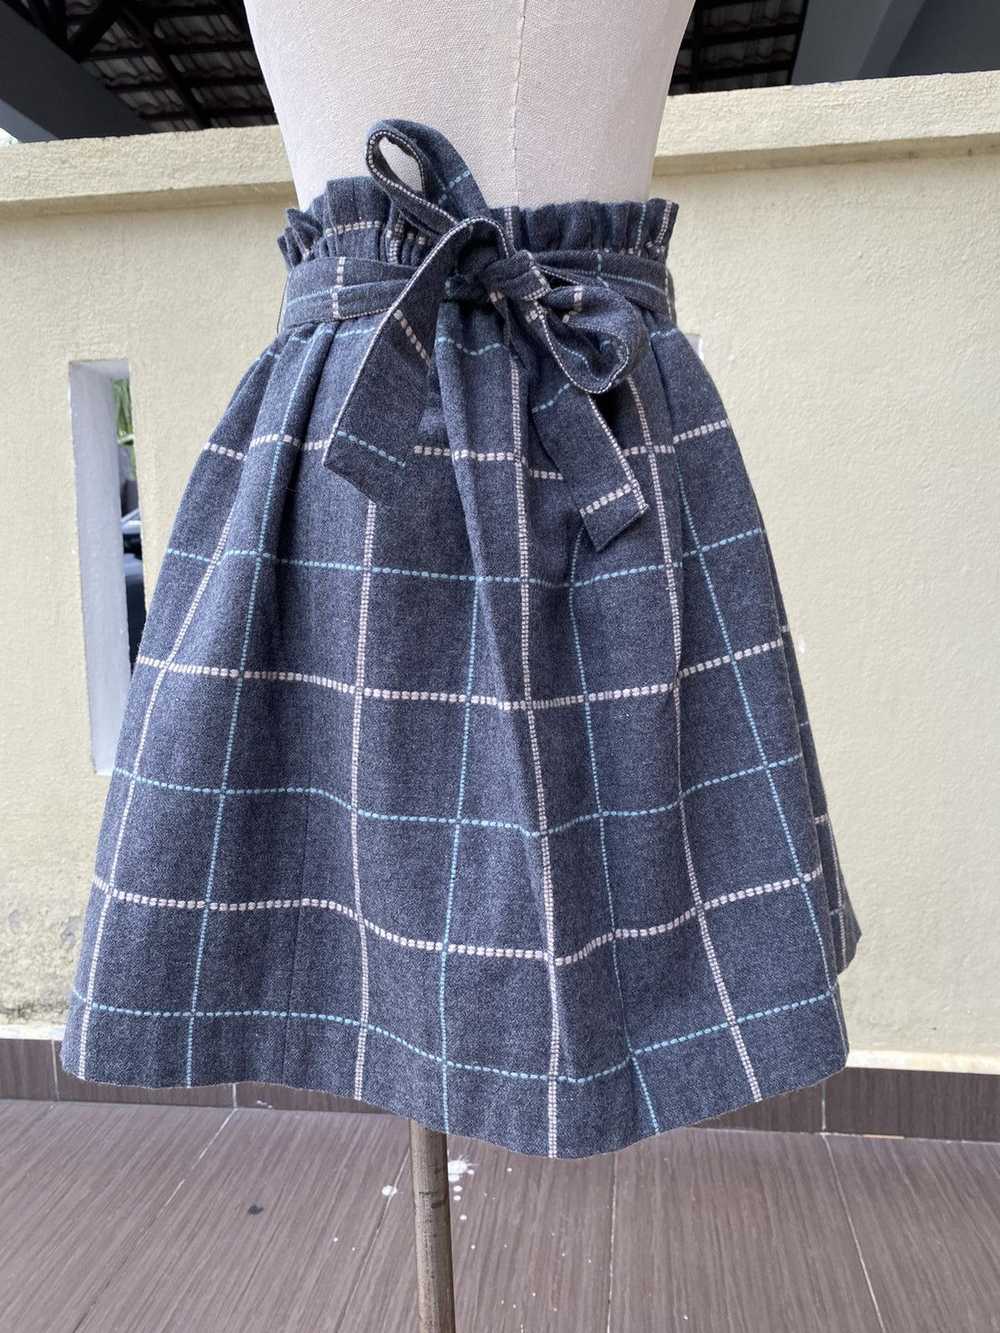 Agnes B. wool skirt - image 3